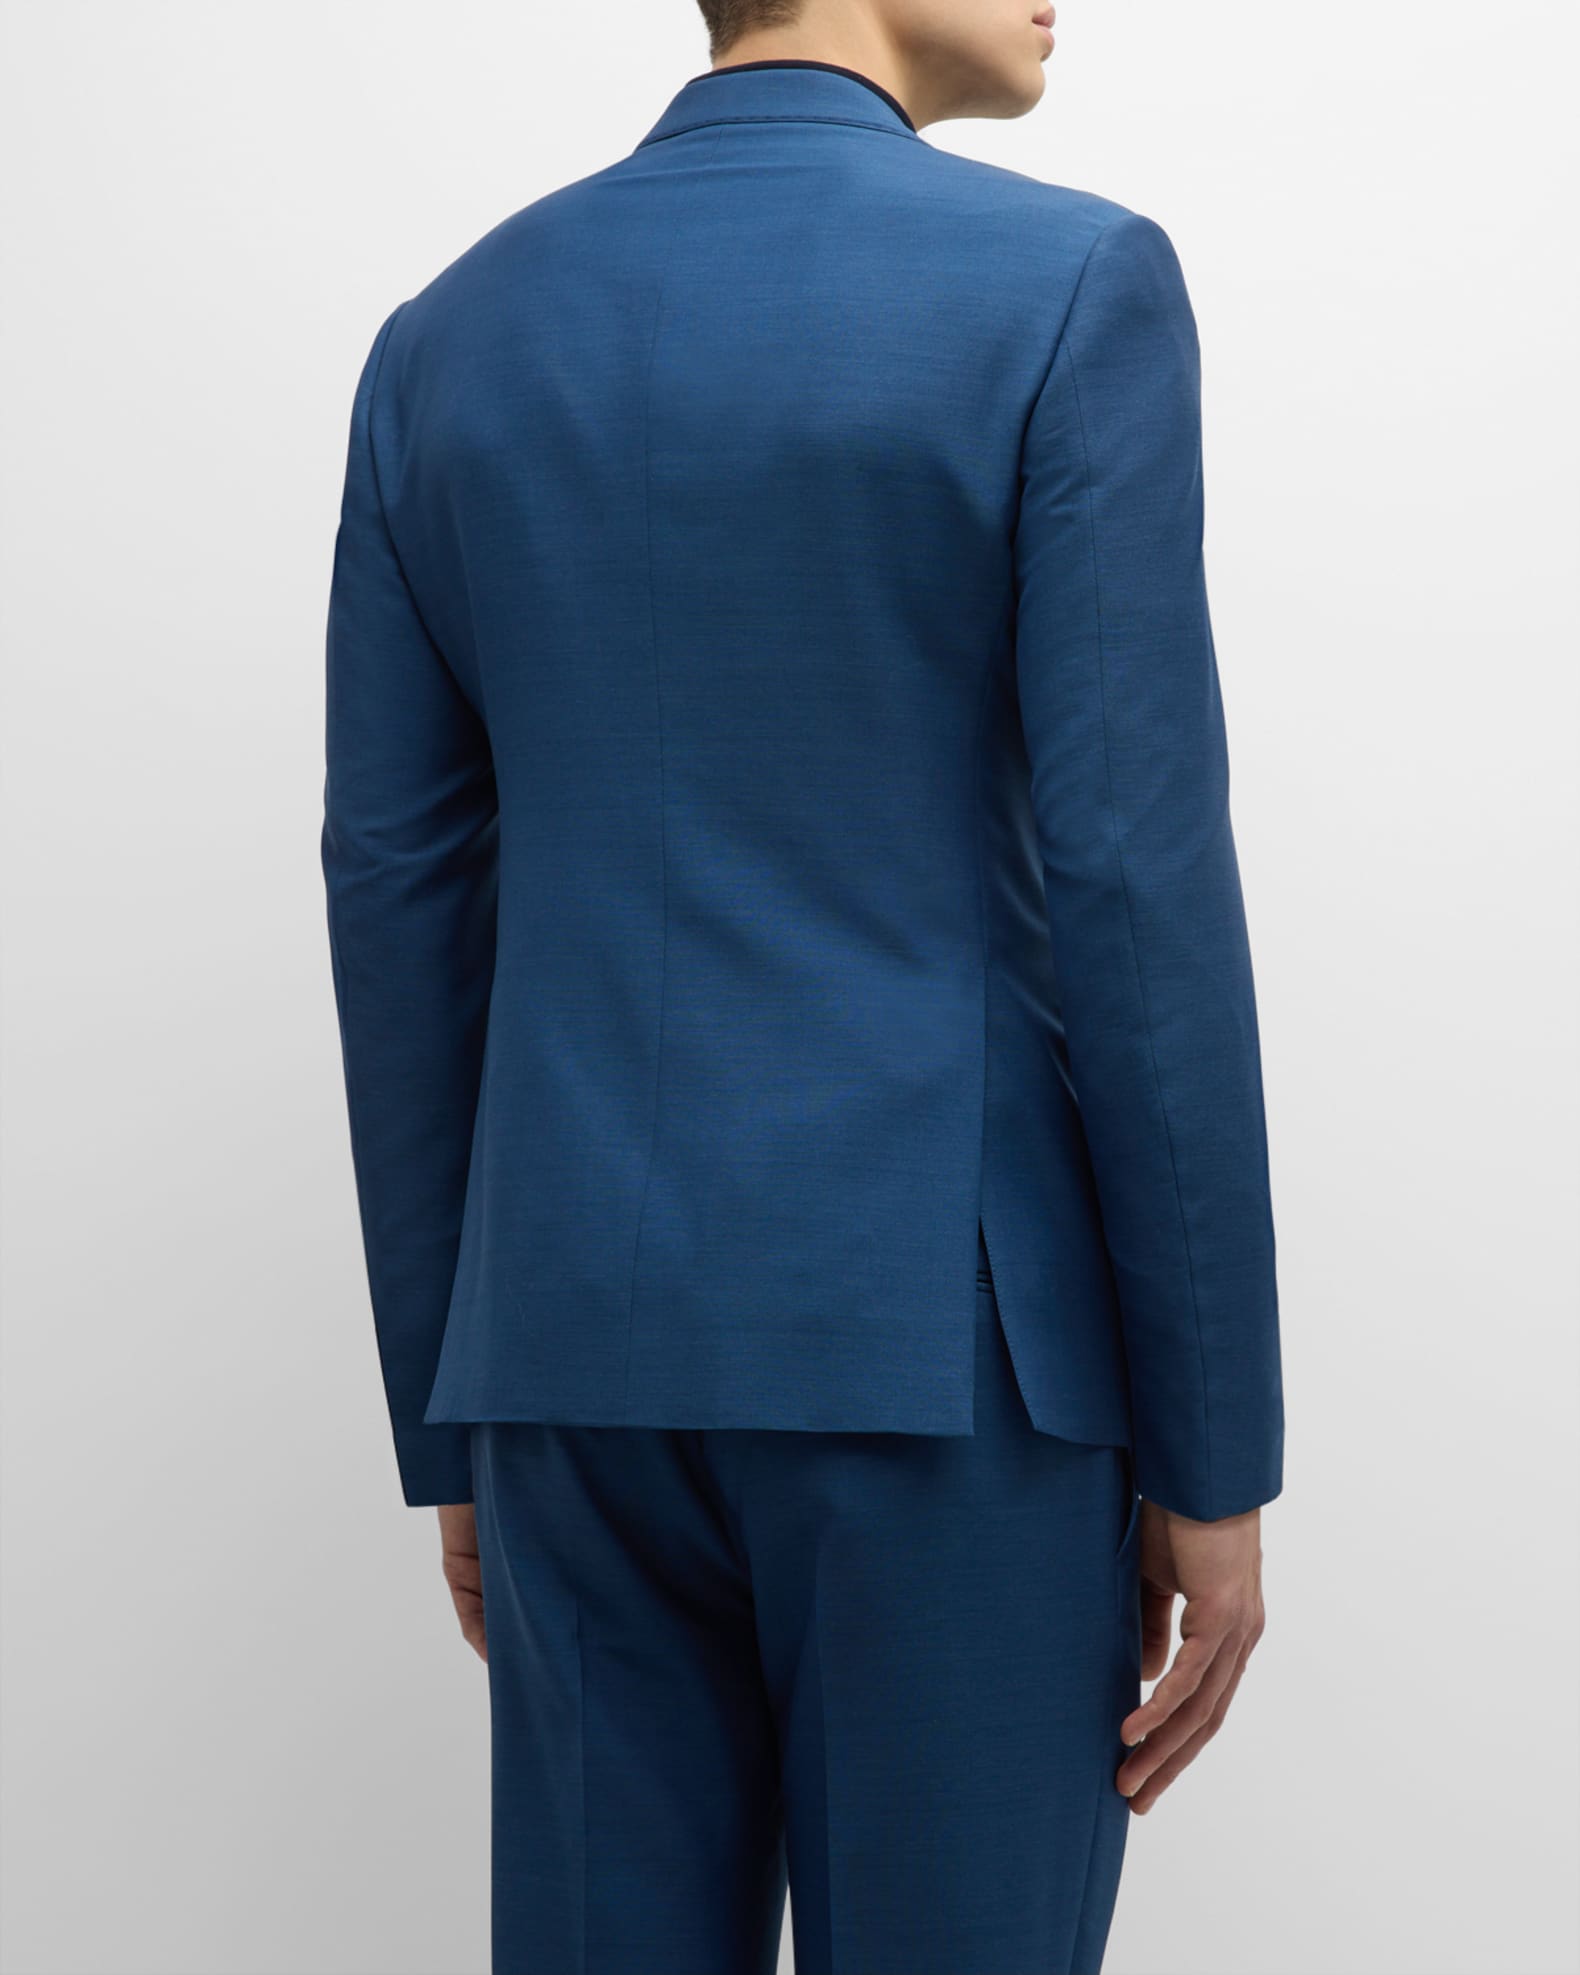 Giorgio Armani Men's Solid Wool-Blend Suit | Neiman Marcus